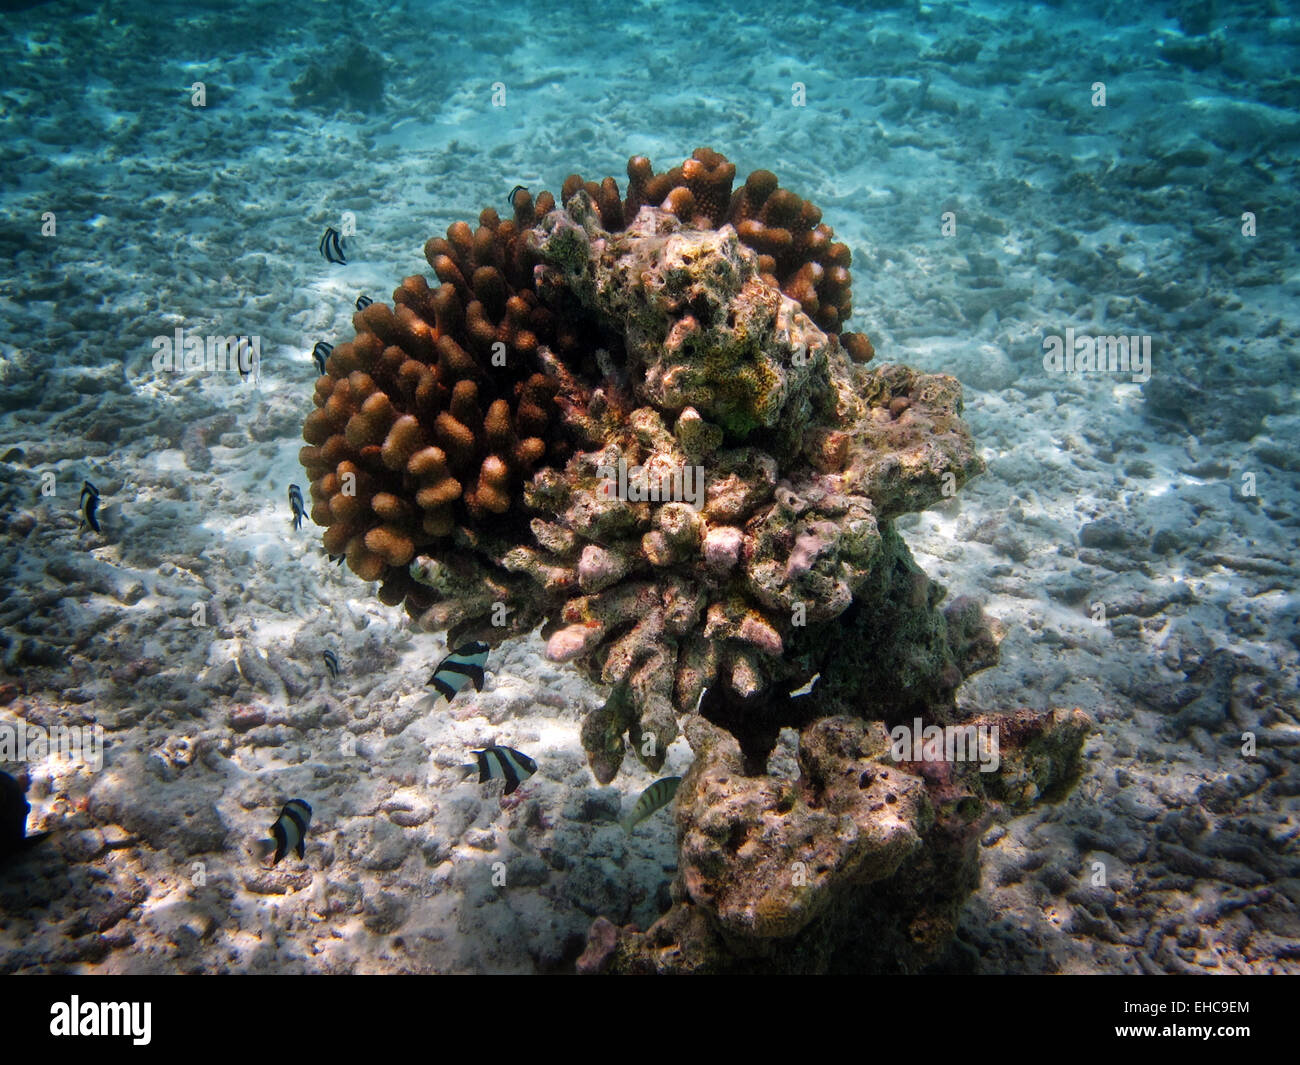 A shoal of Humbug damselfish or Whitetail dascyllus swimming around Acropora coral heads in the Maldives Stock Photo